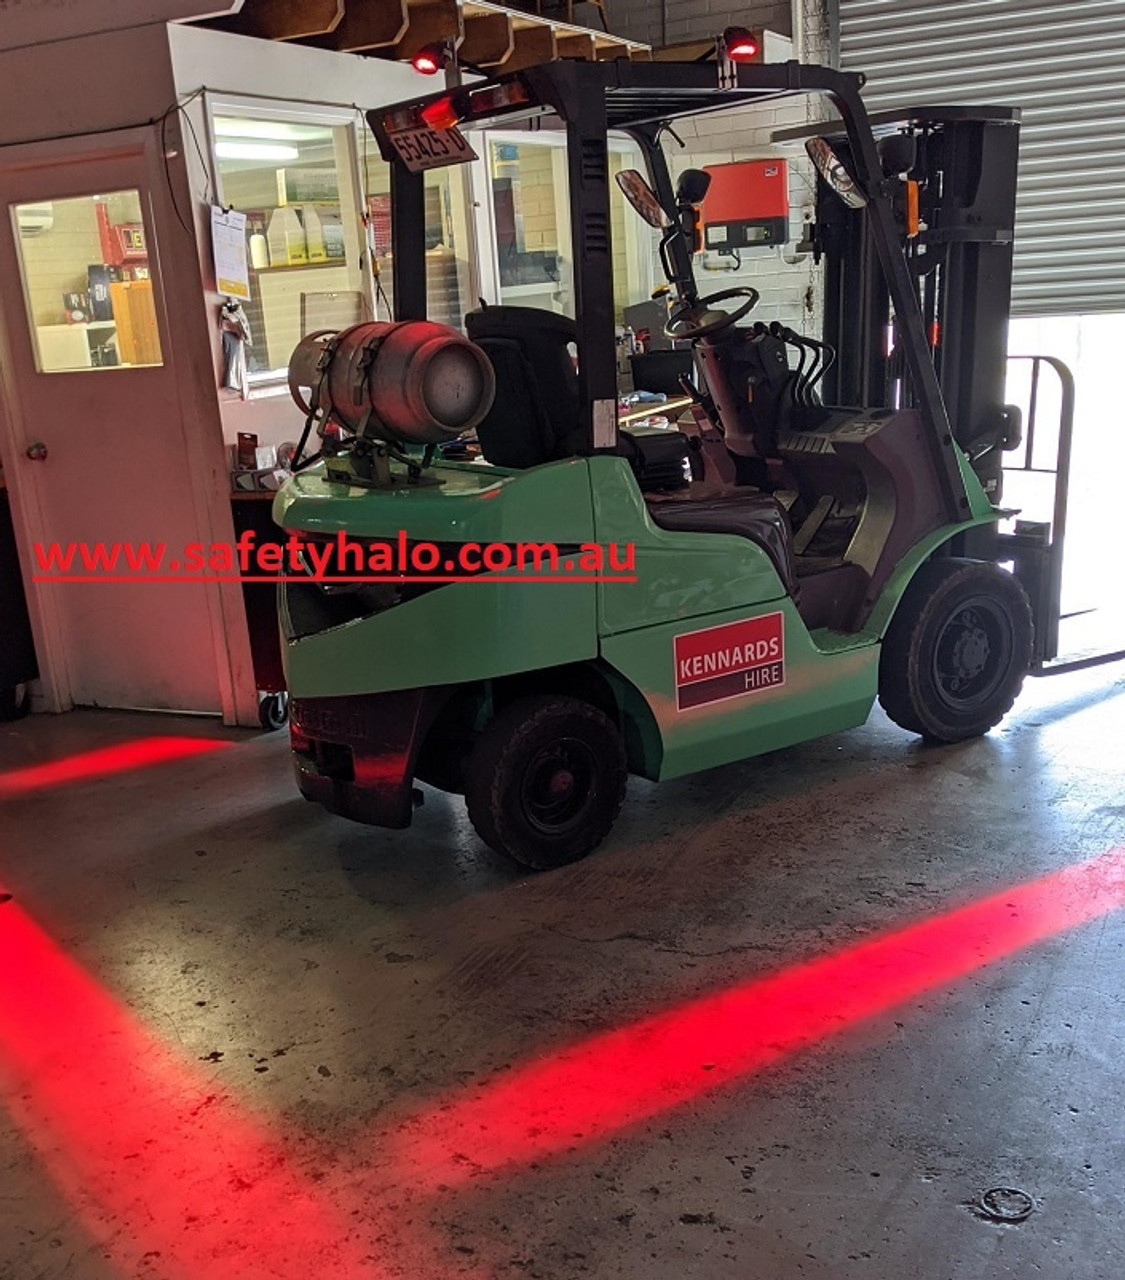 Safety Halo System Kennards Hire Forklift Ultimate LED